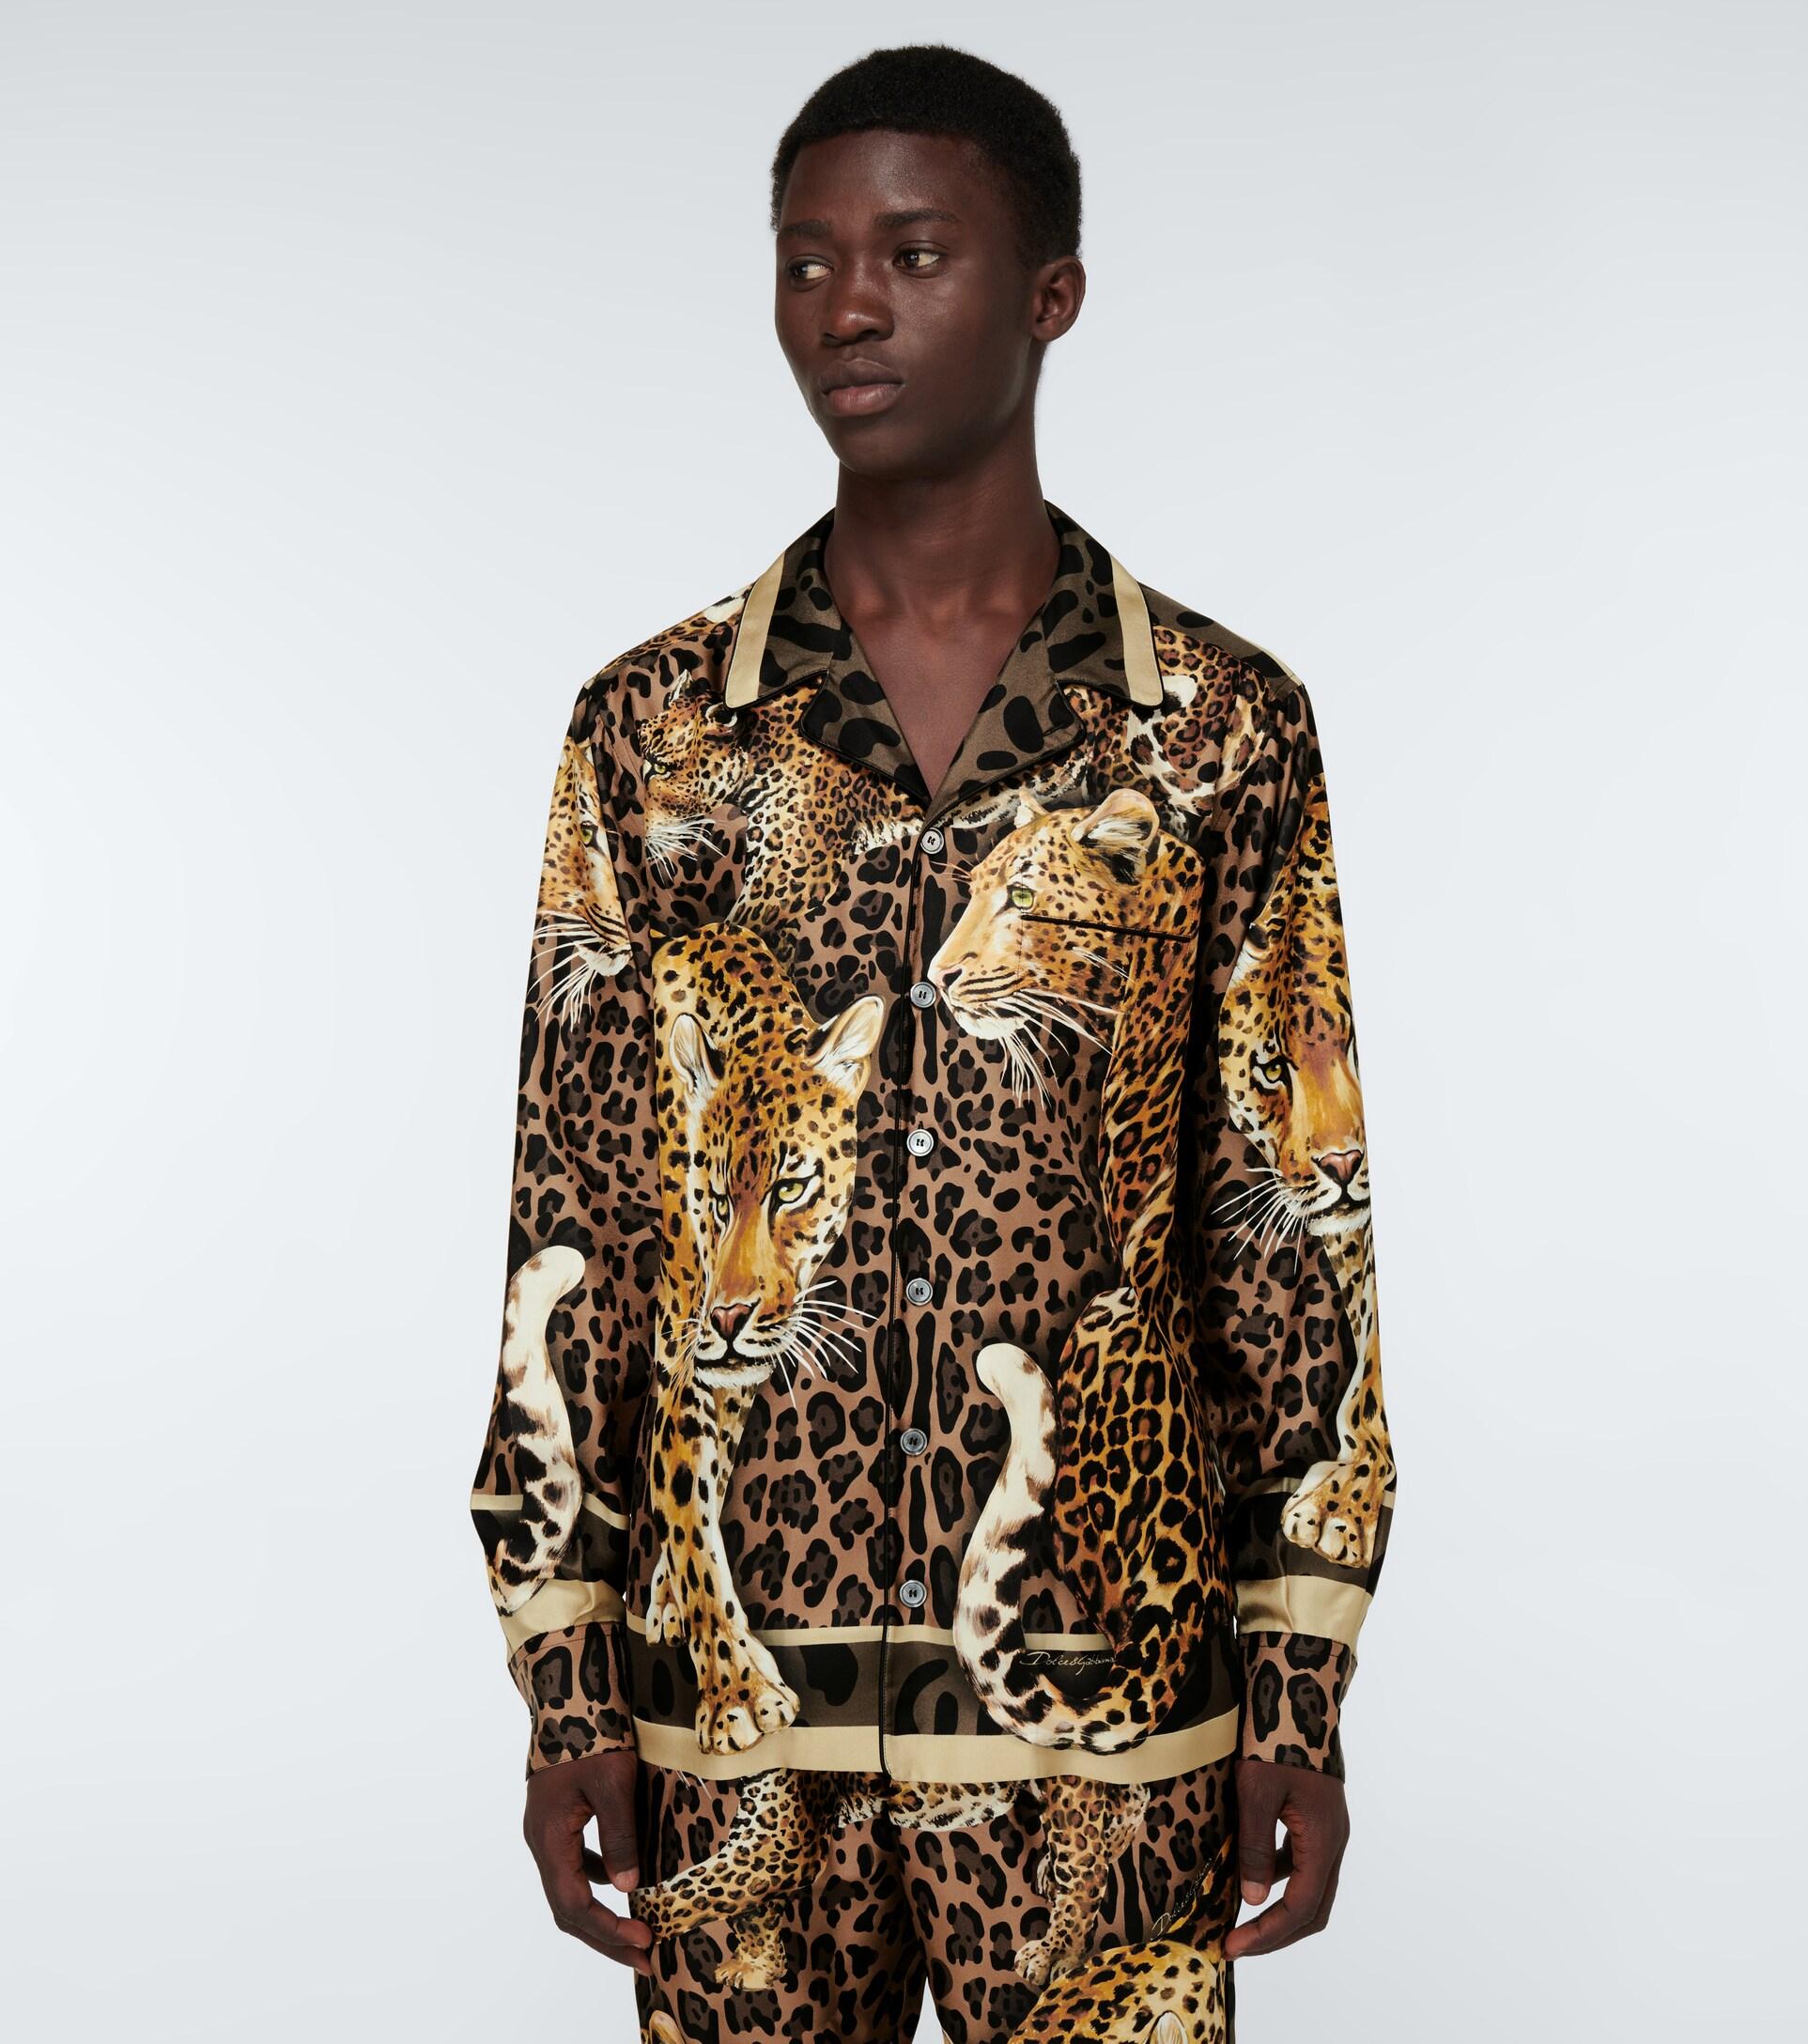 Leopard Print Brown Shirt